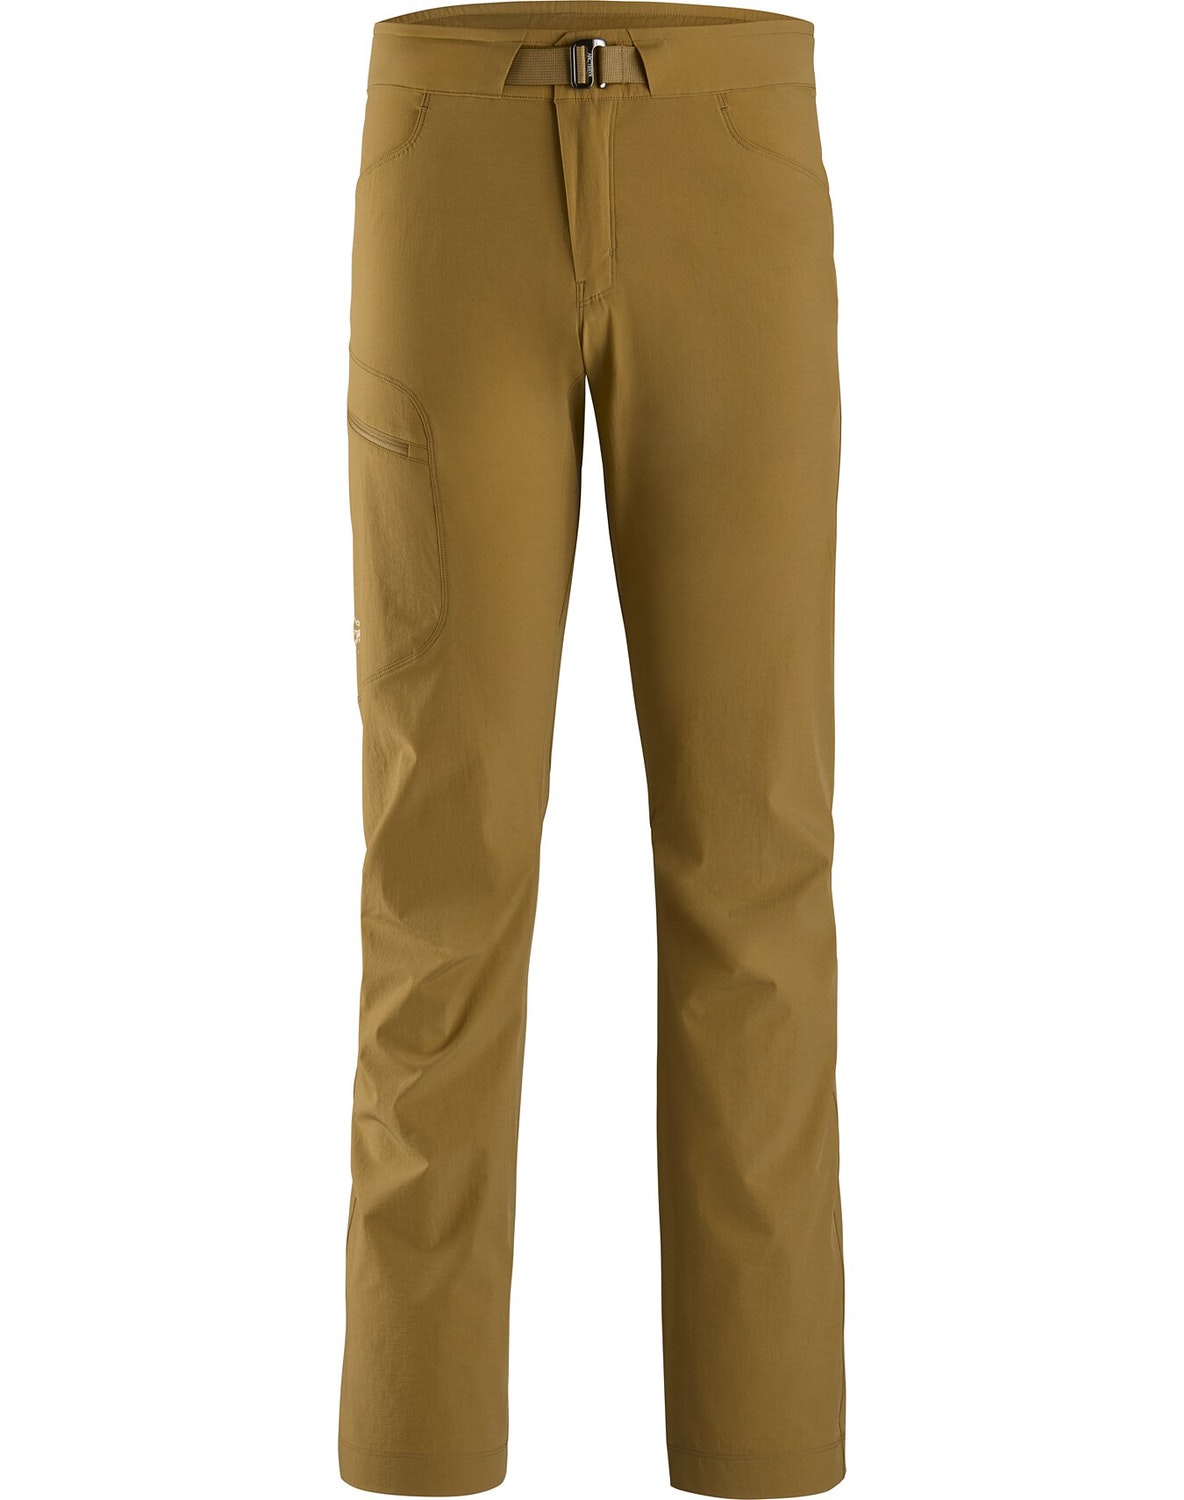 Pantaloni Da Sci Arc'teryx Lefroy Uomo khaki - IT-63575433